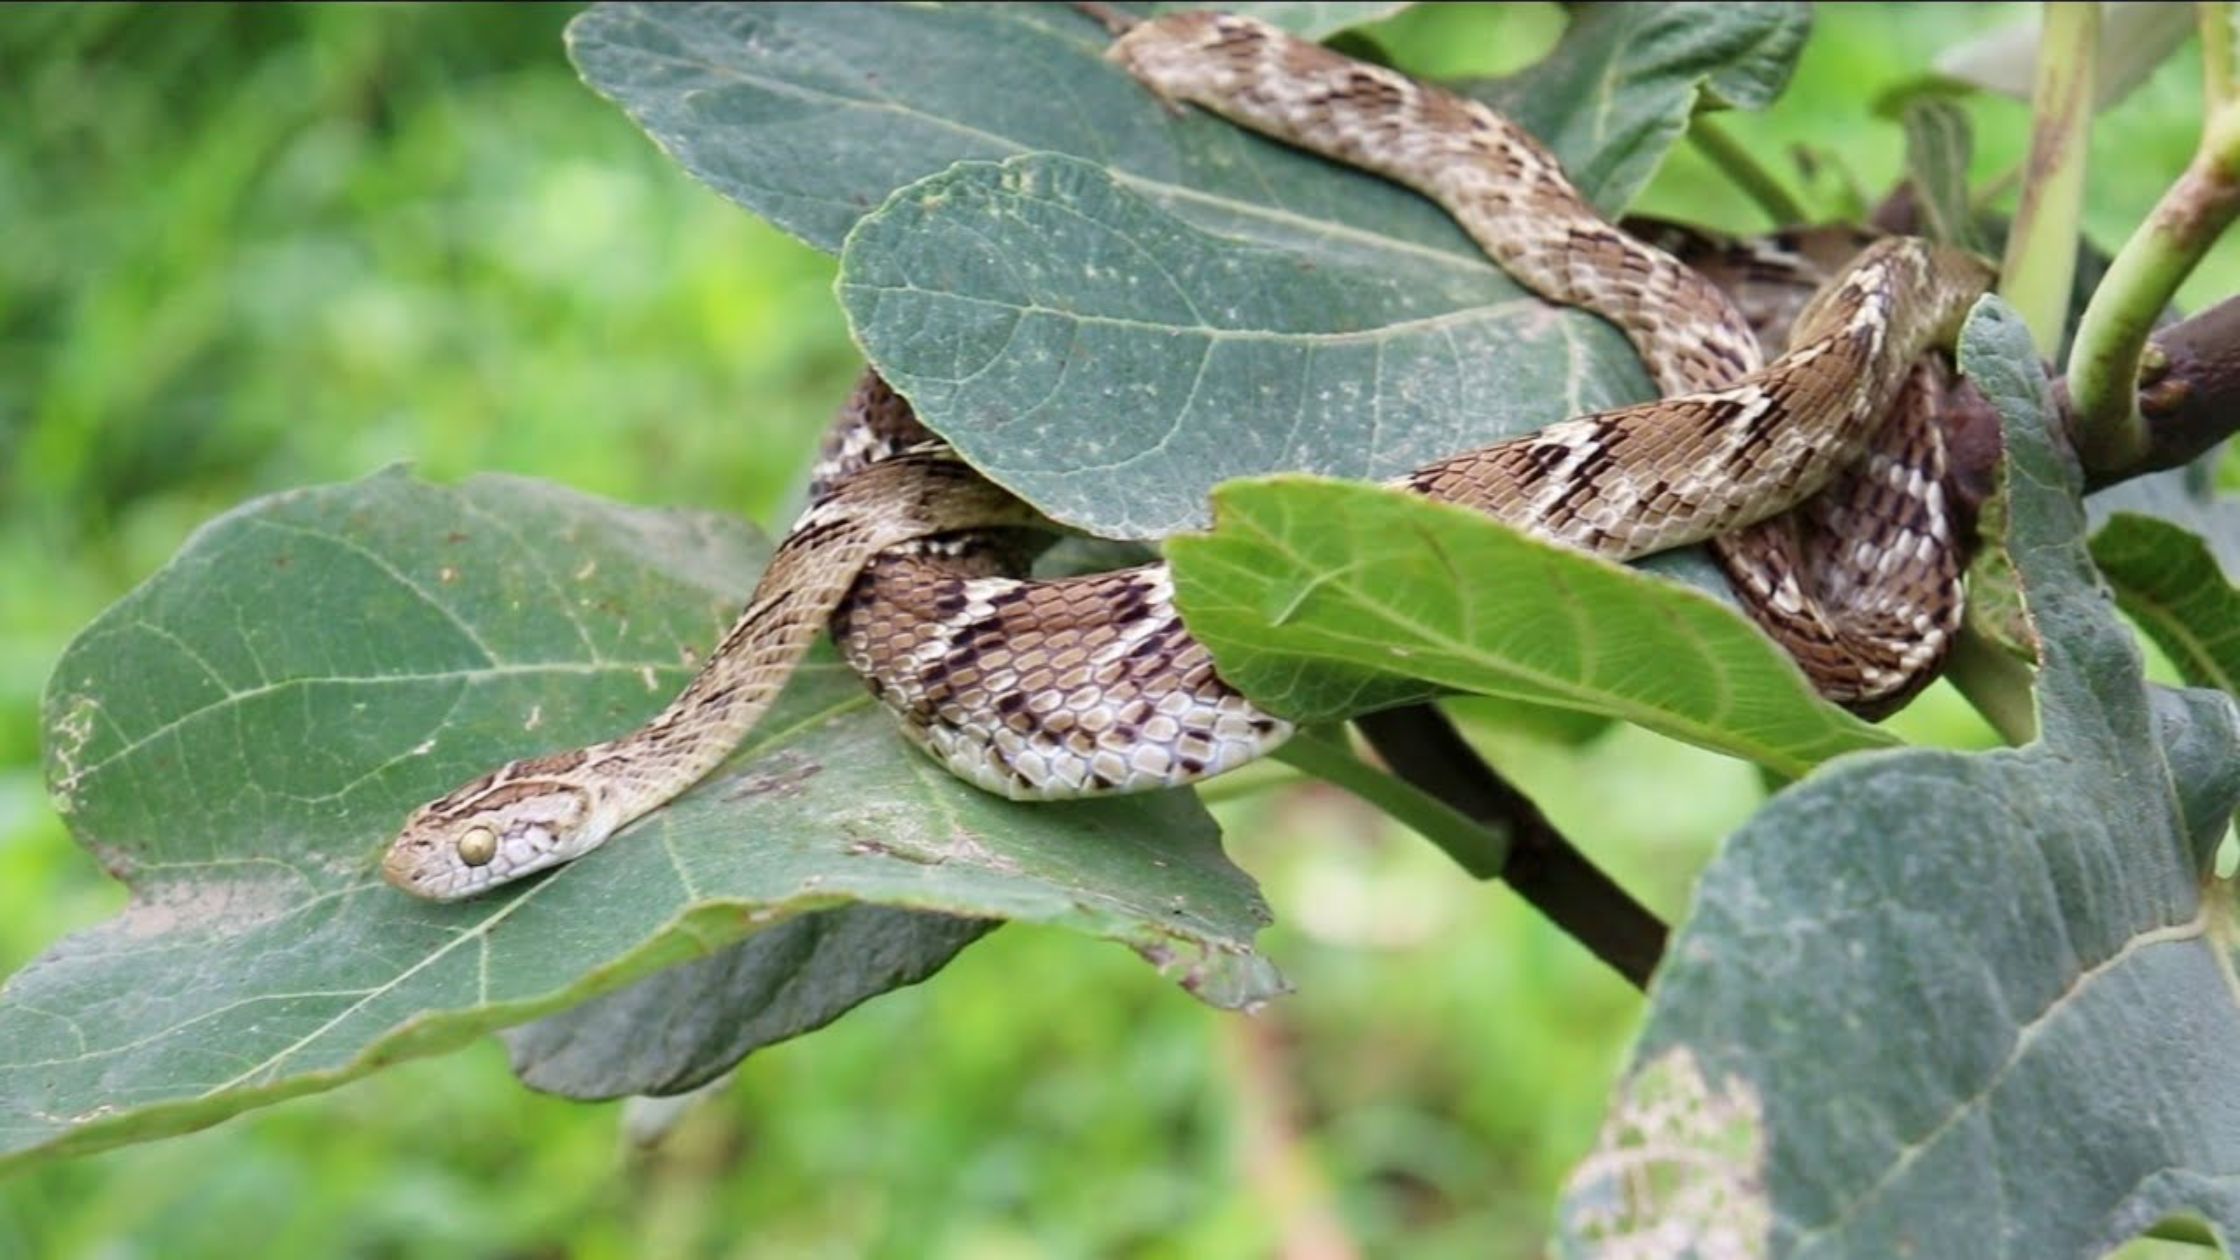 rare common cat snake found in valmiki nagar